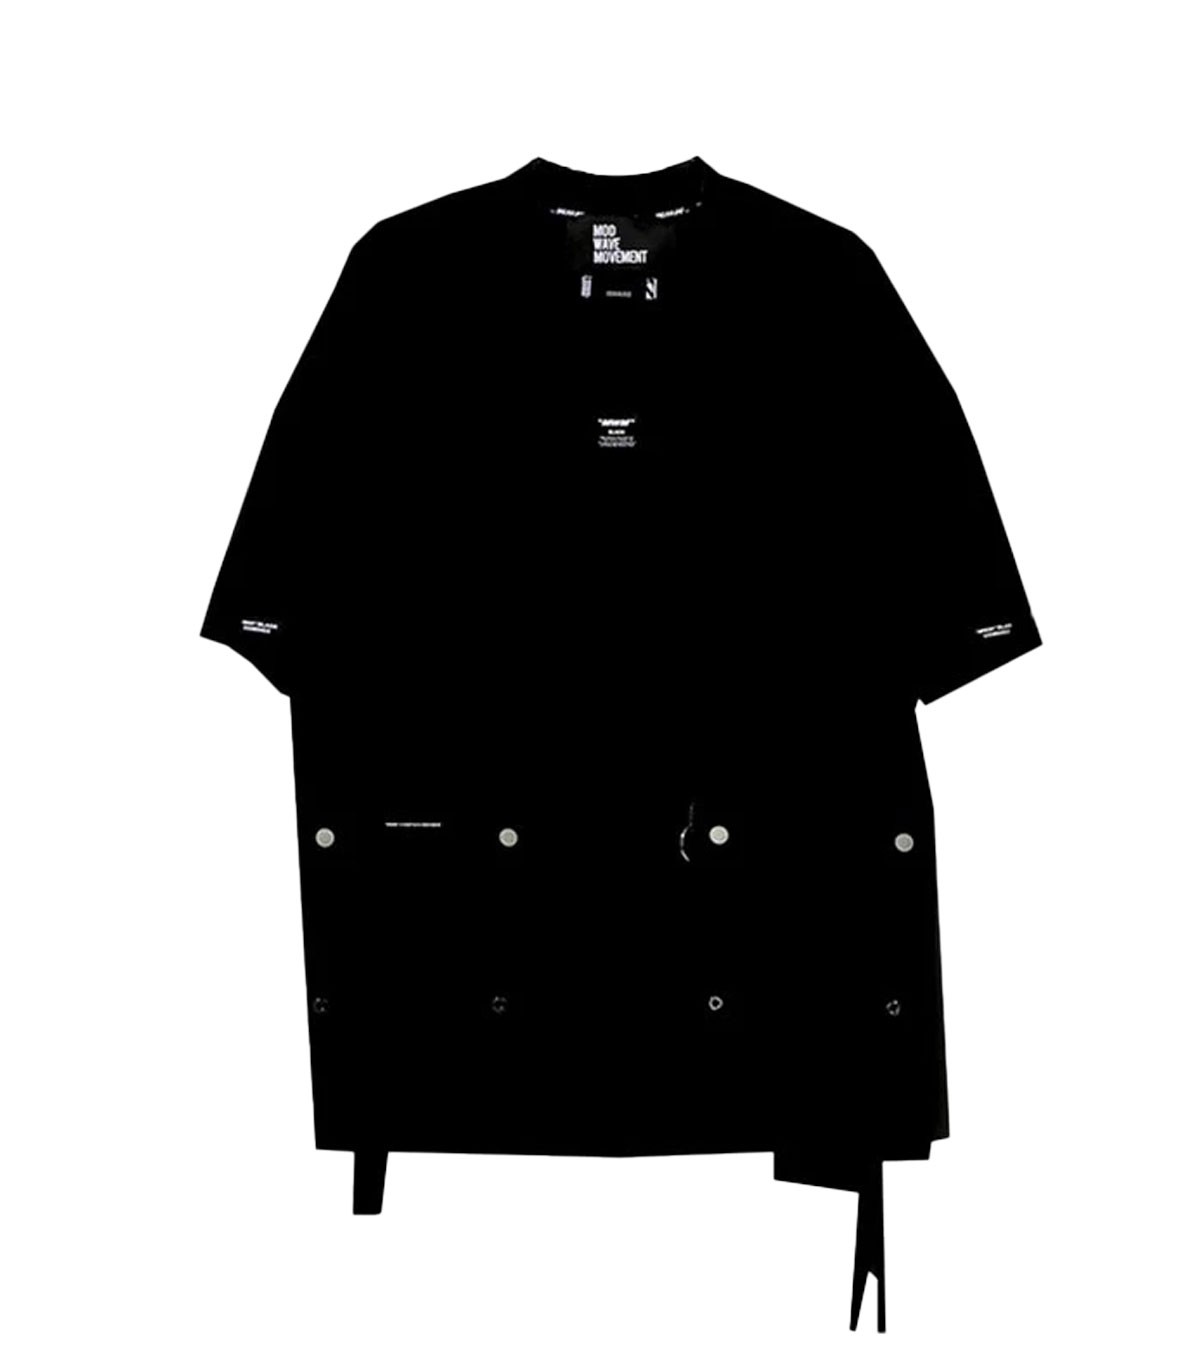 MWM - Camiseta de Manga Corta - Negro